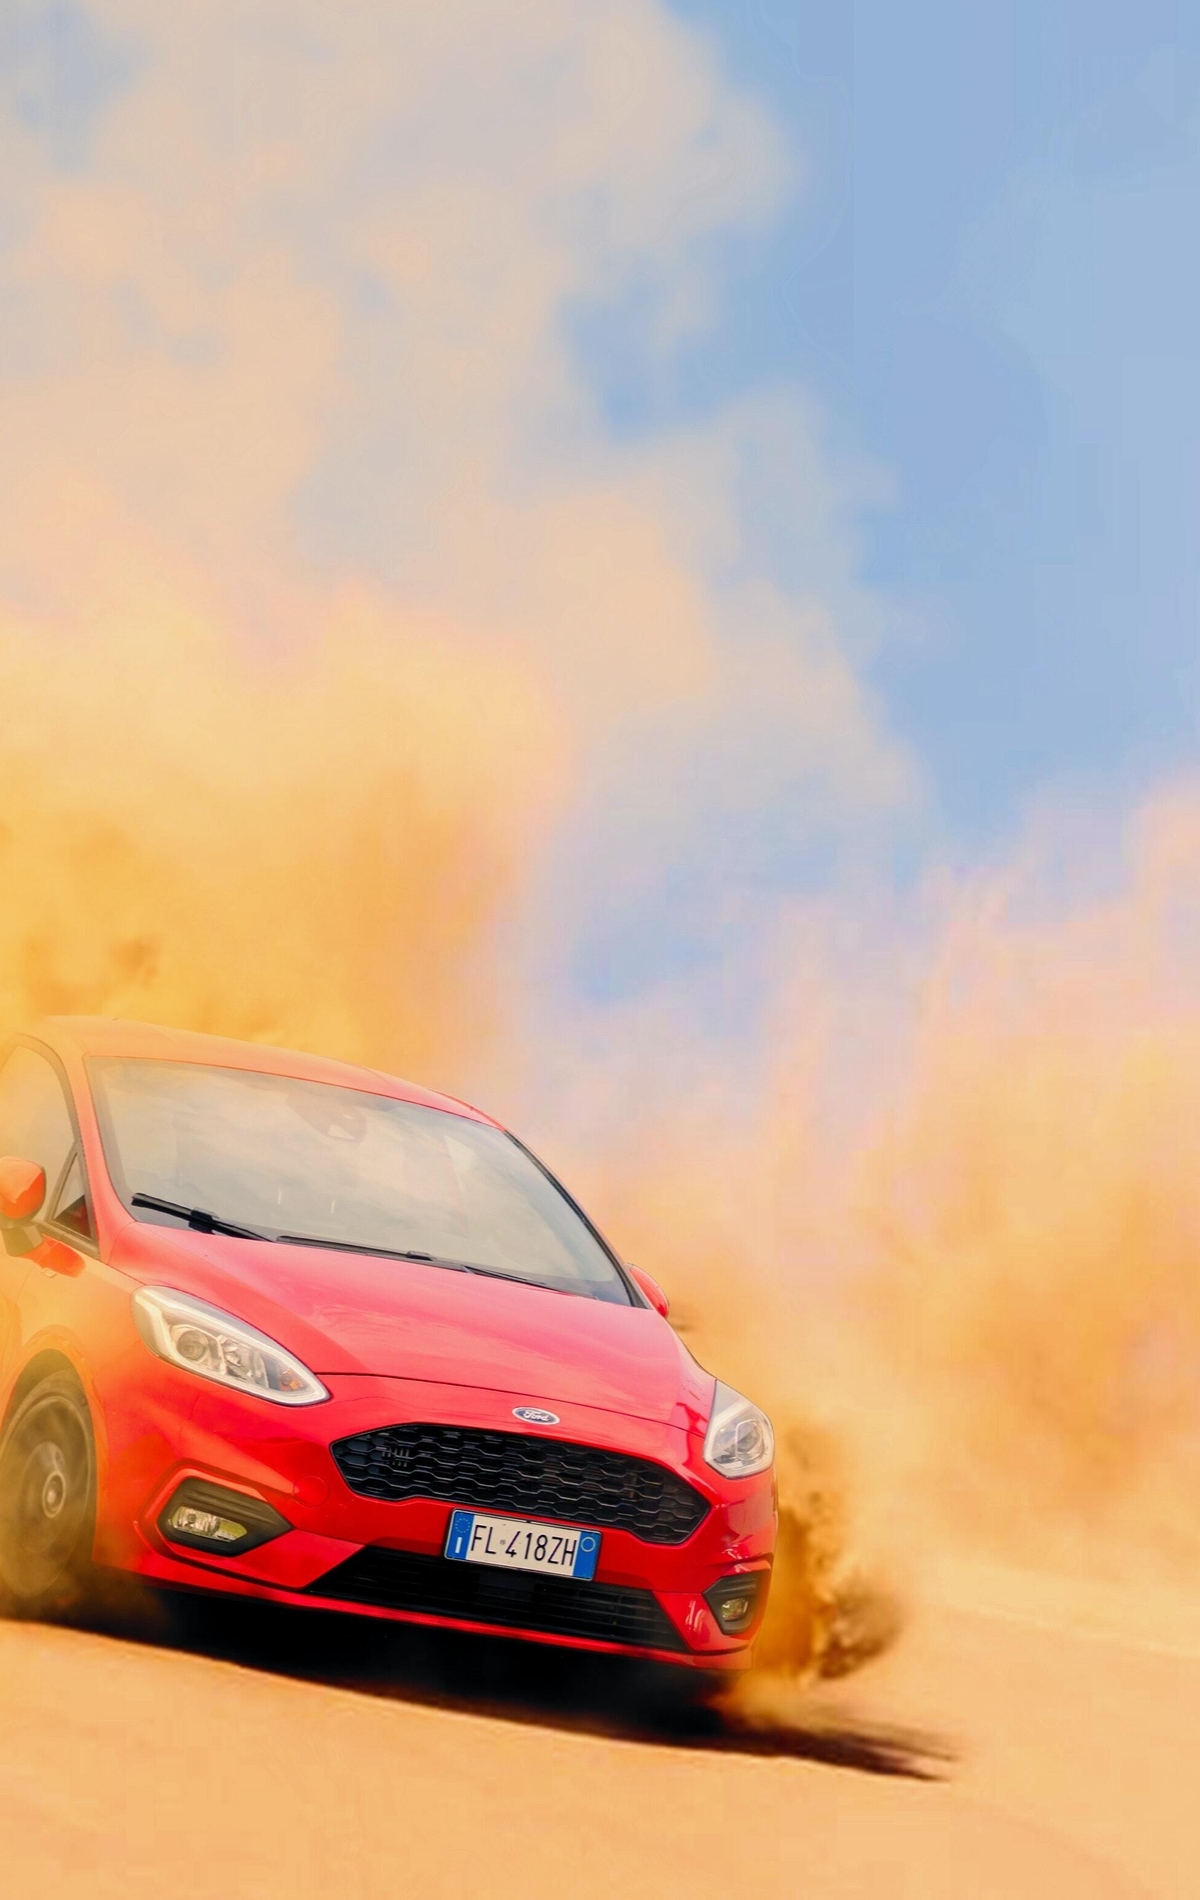 Картинка: Ford, автомобиль, песок, пыль, дрифт, буксы, дымка